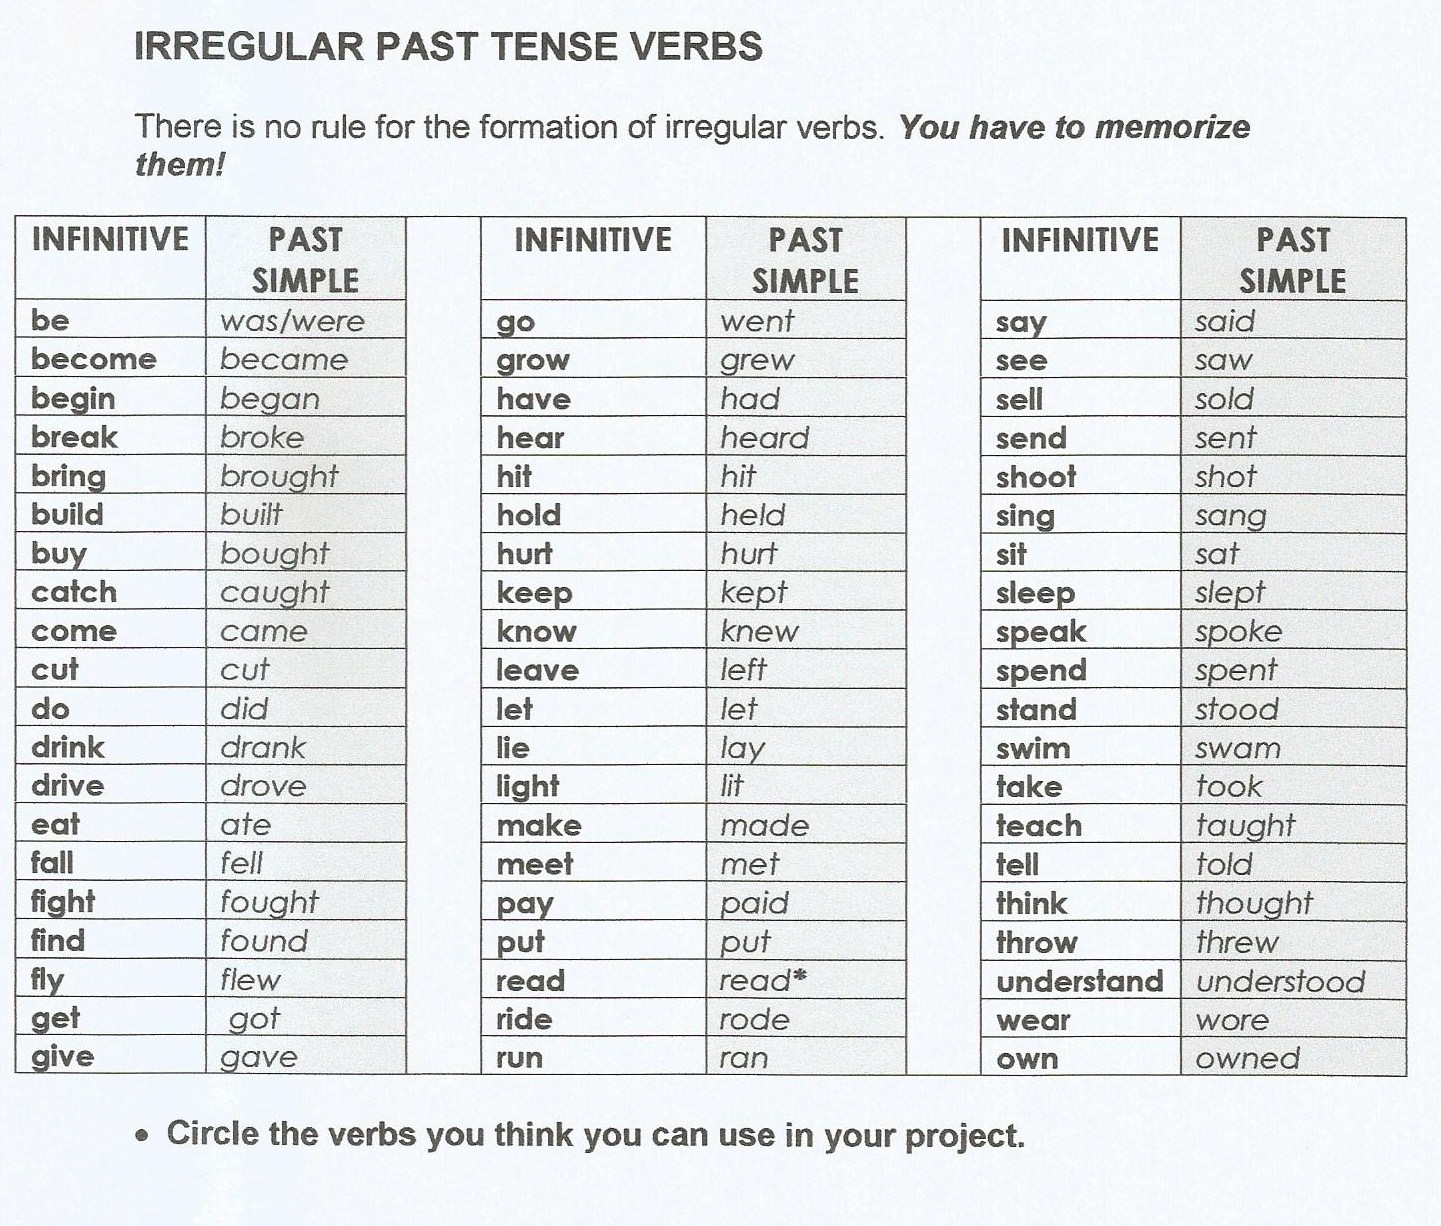 irregular verbs examples present and past tense